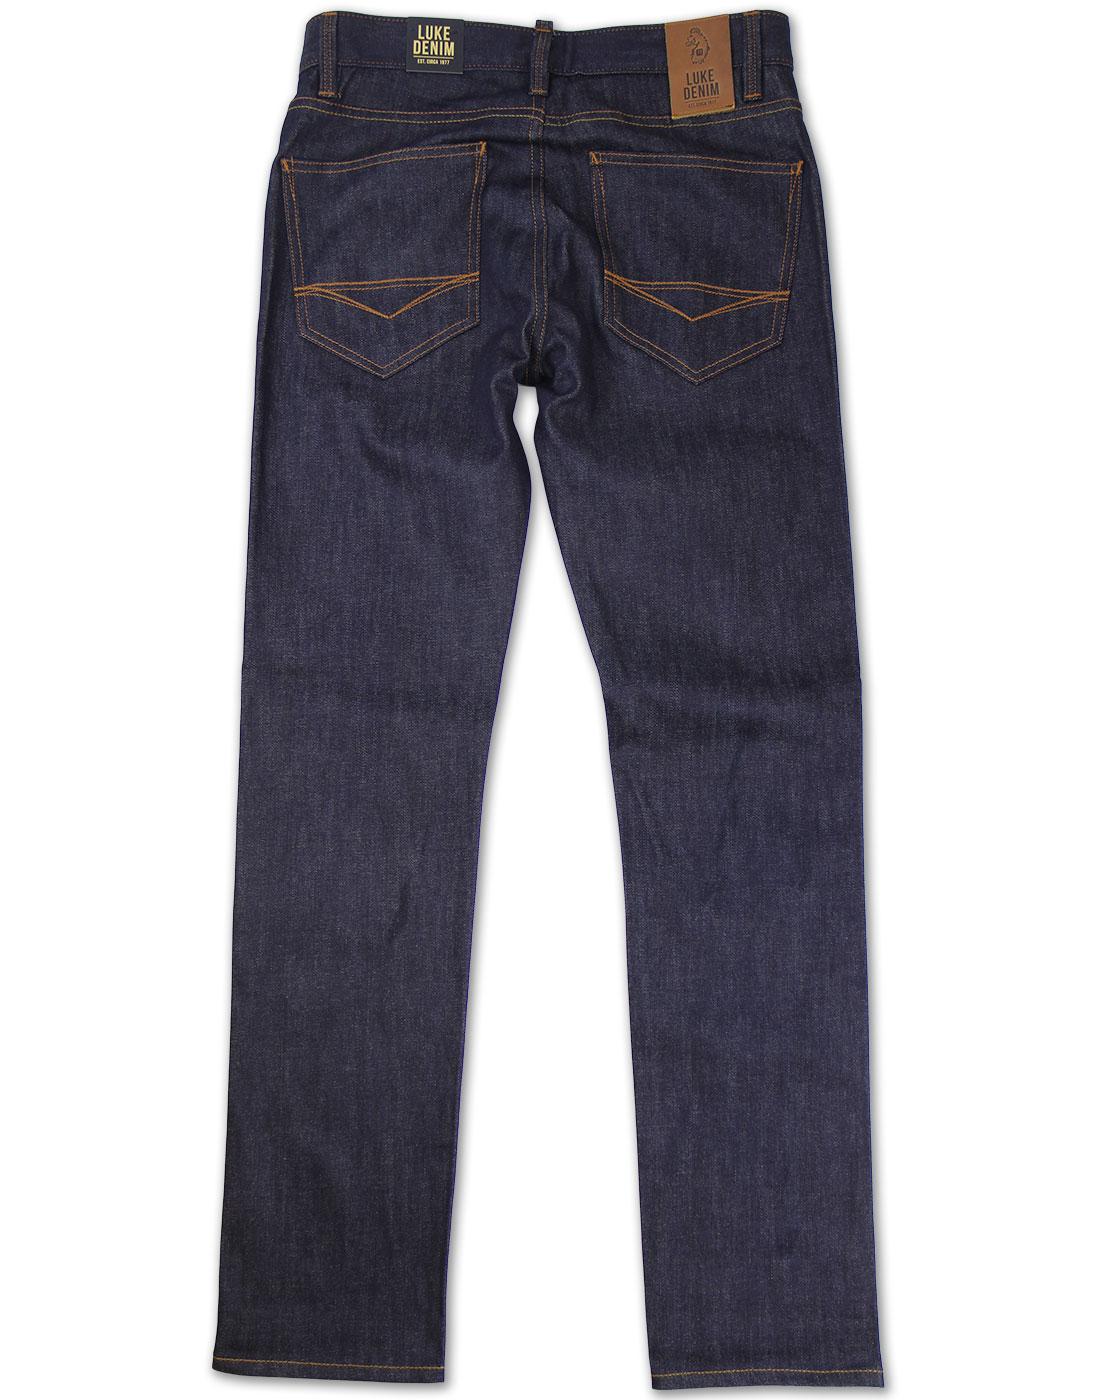 LUKE 1977 Freddie Fast Raw Dark Blue Jeans Slim Straight Fit Stretch Navy Denim